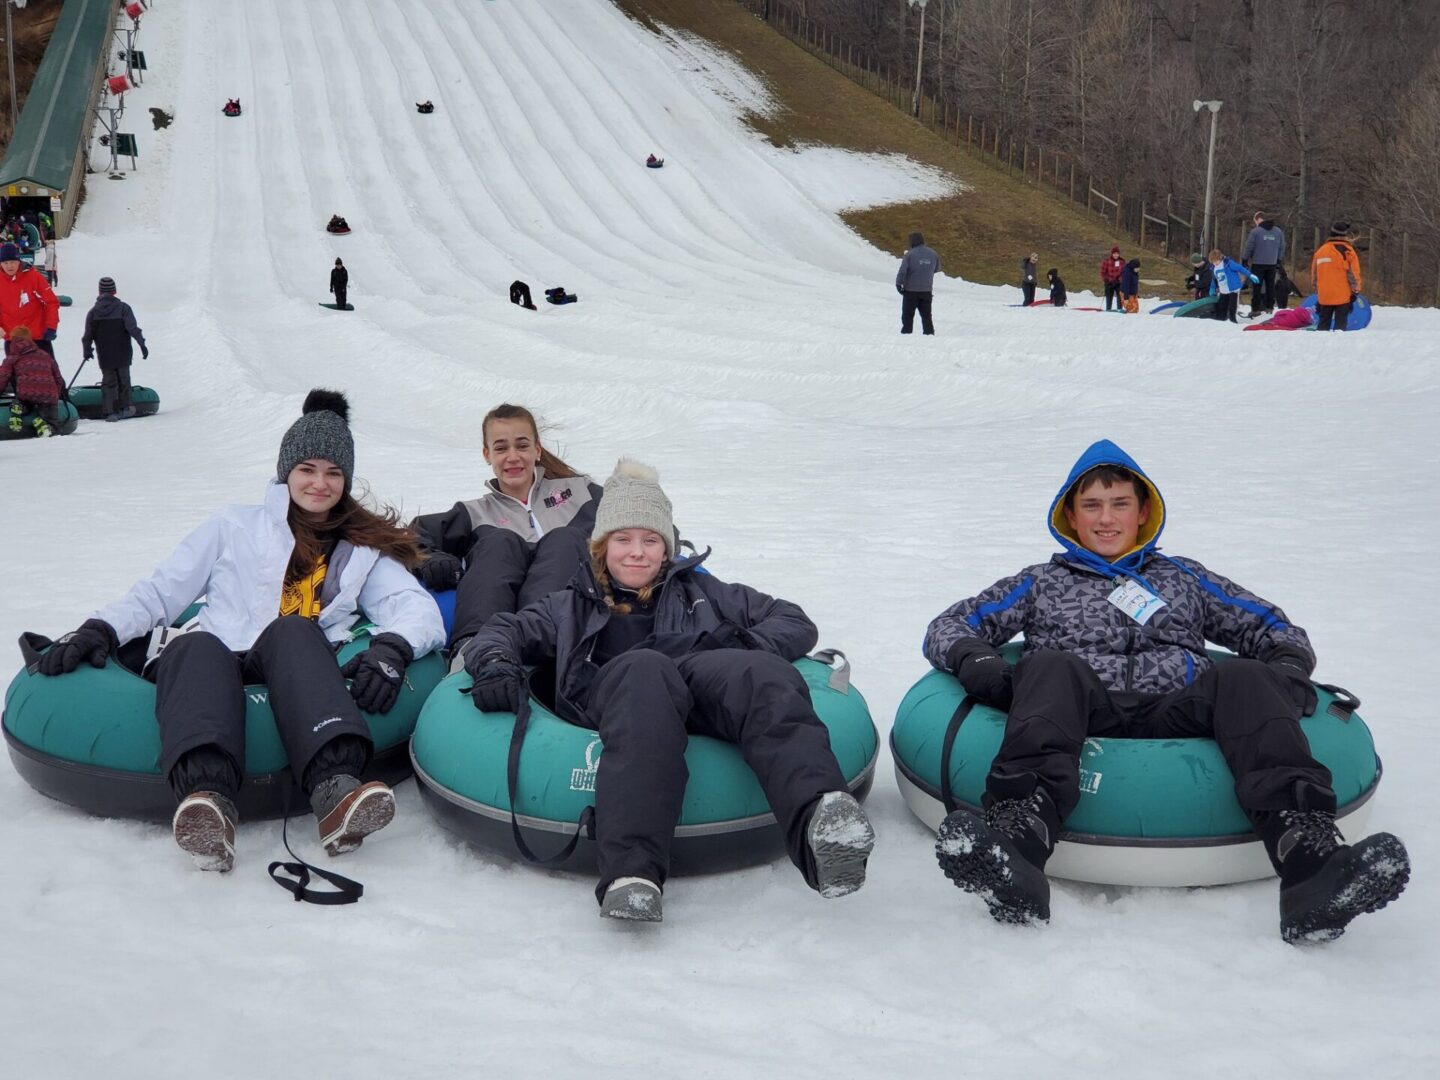 A P.L.E.D.G.E. Leadership Program group enthusiastically riding down a snow slope on tubes.